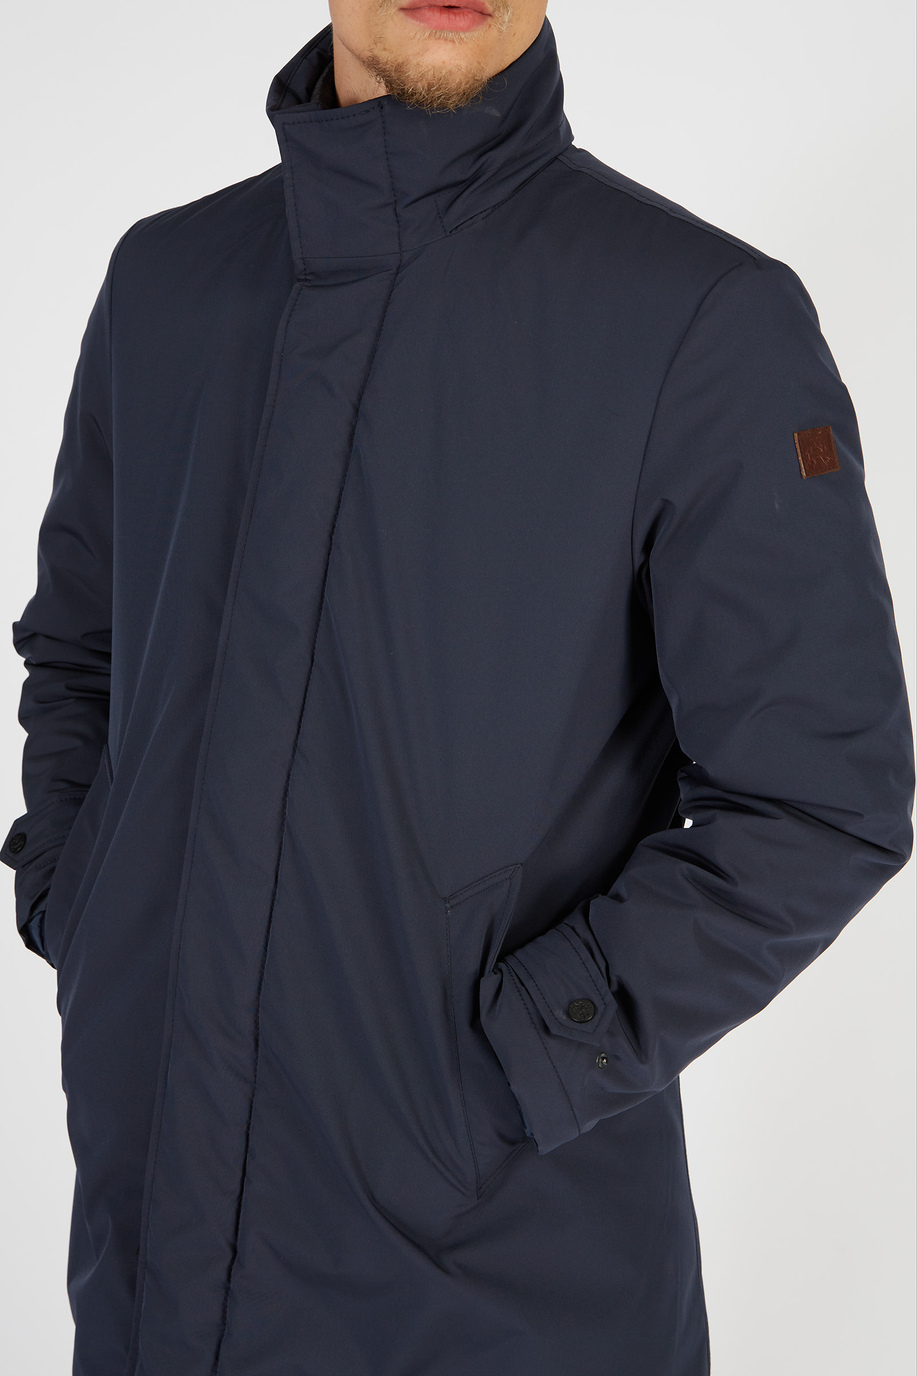 Herren Blue Ribbon Jacke aus Nylon mit normaler Passform - Premium Fabrics | La Martina - Official Online Shop